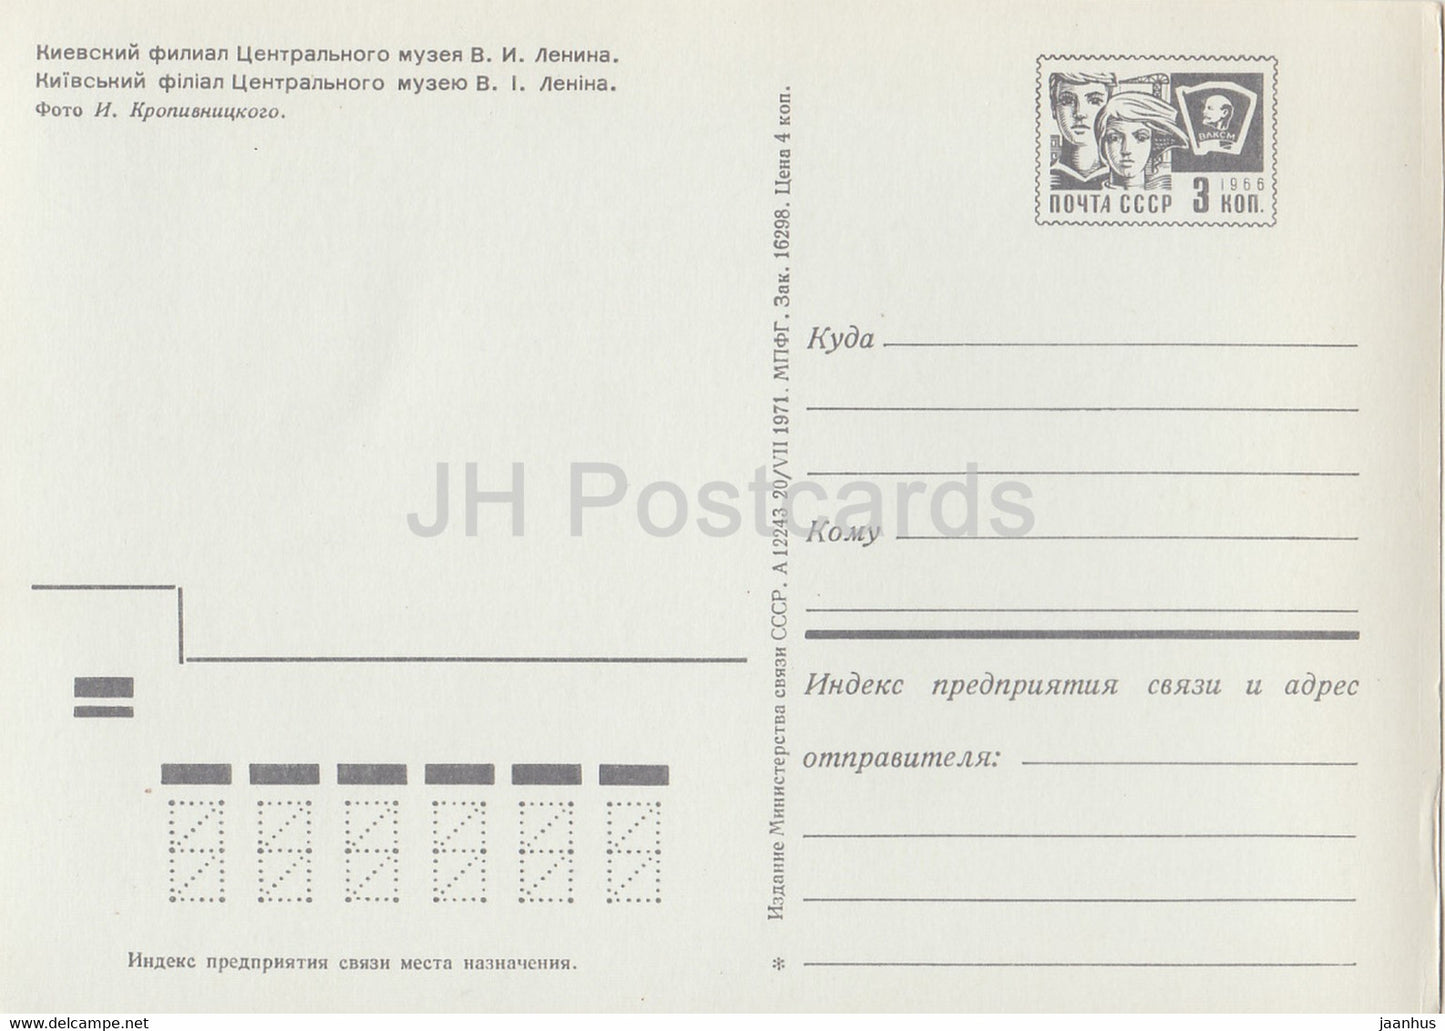 Kiev - Kiev - Musée central Lénine - entier postal - 1971 - Ukraine URSS - inutilisé